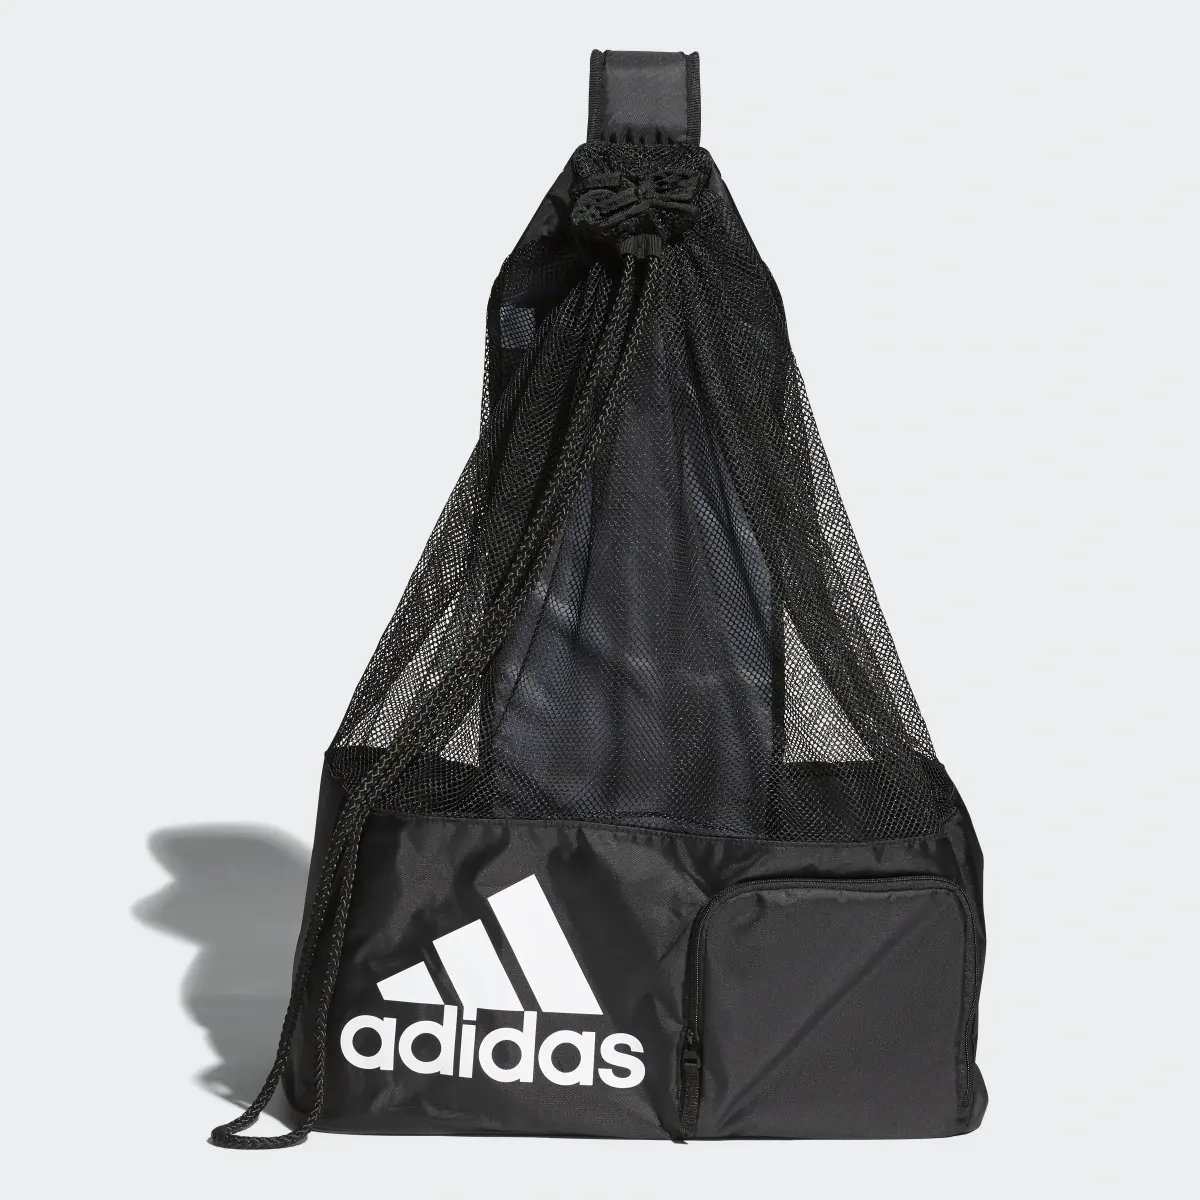 Adidas Stadium Ball Bag. 1